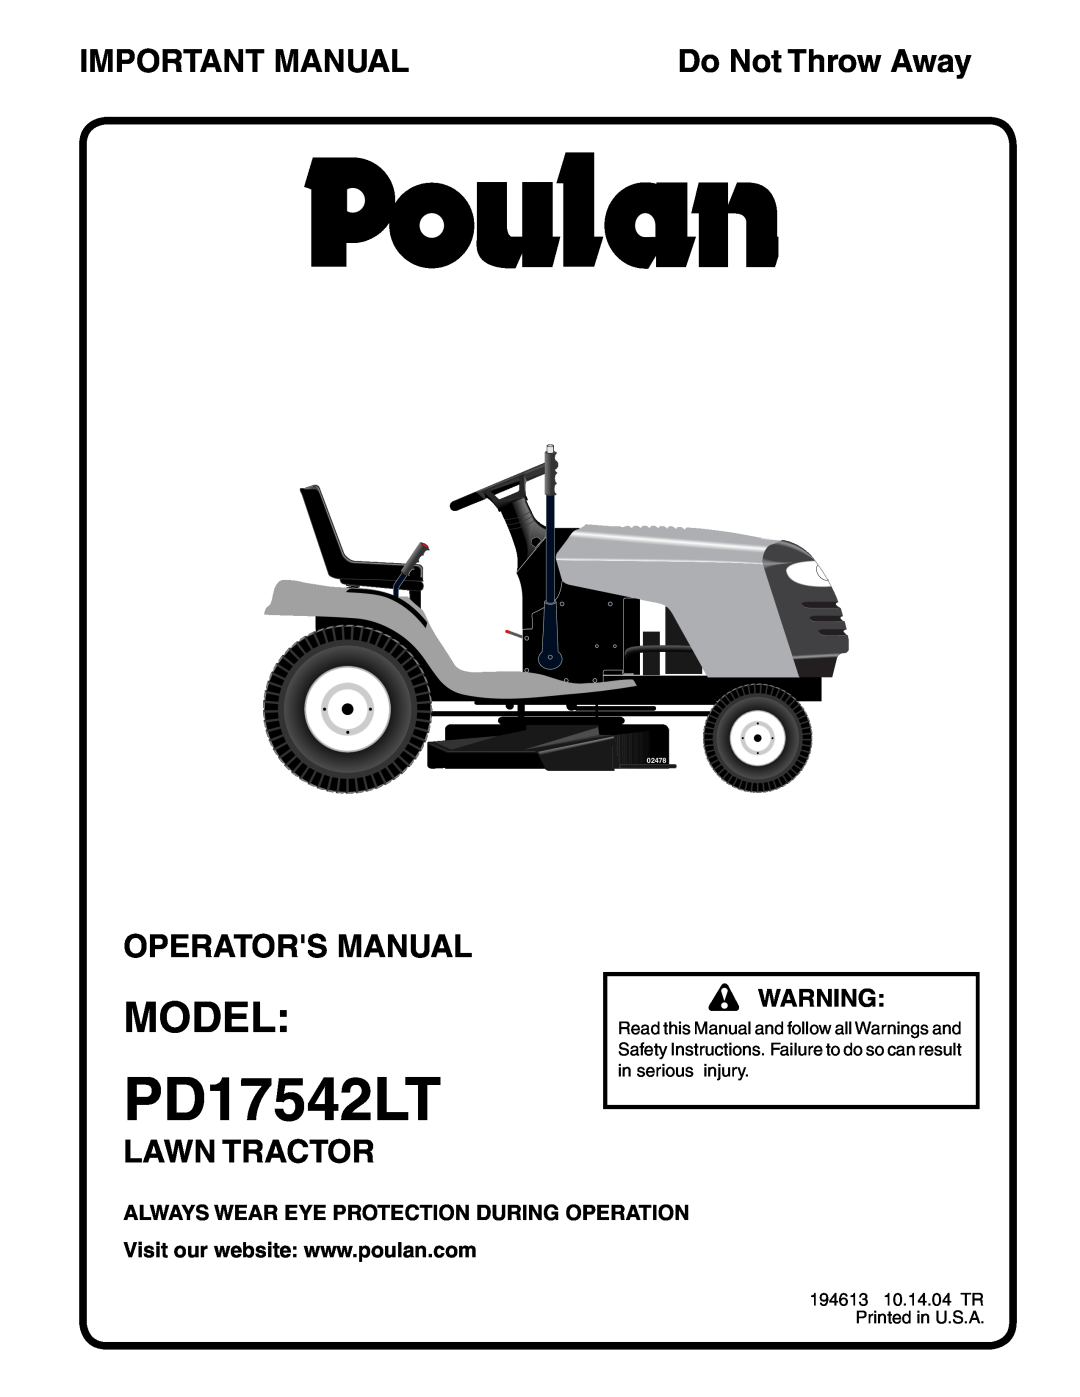 Poulan PD17542LT manual Model, Important Manual, Operators Manual, Lawn Tractor, Do Not Throw Away, 02478 